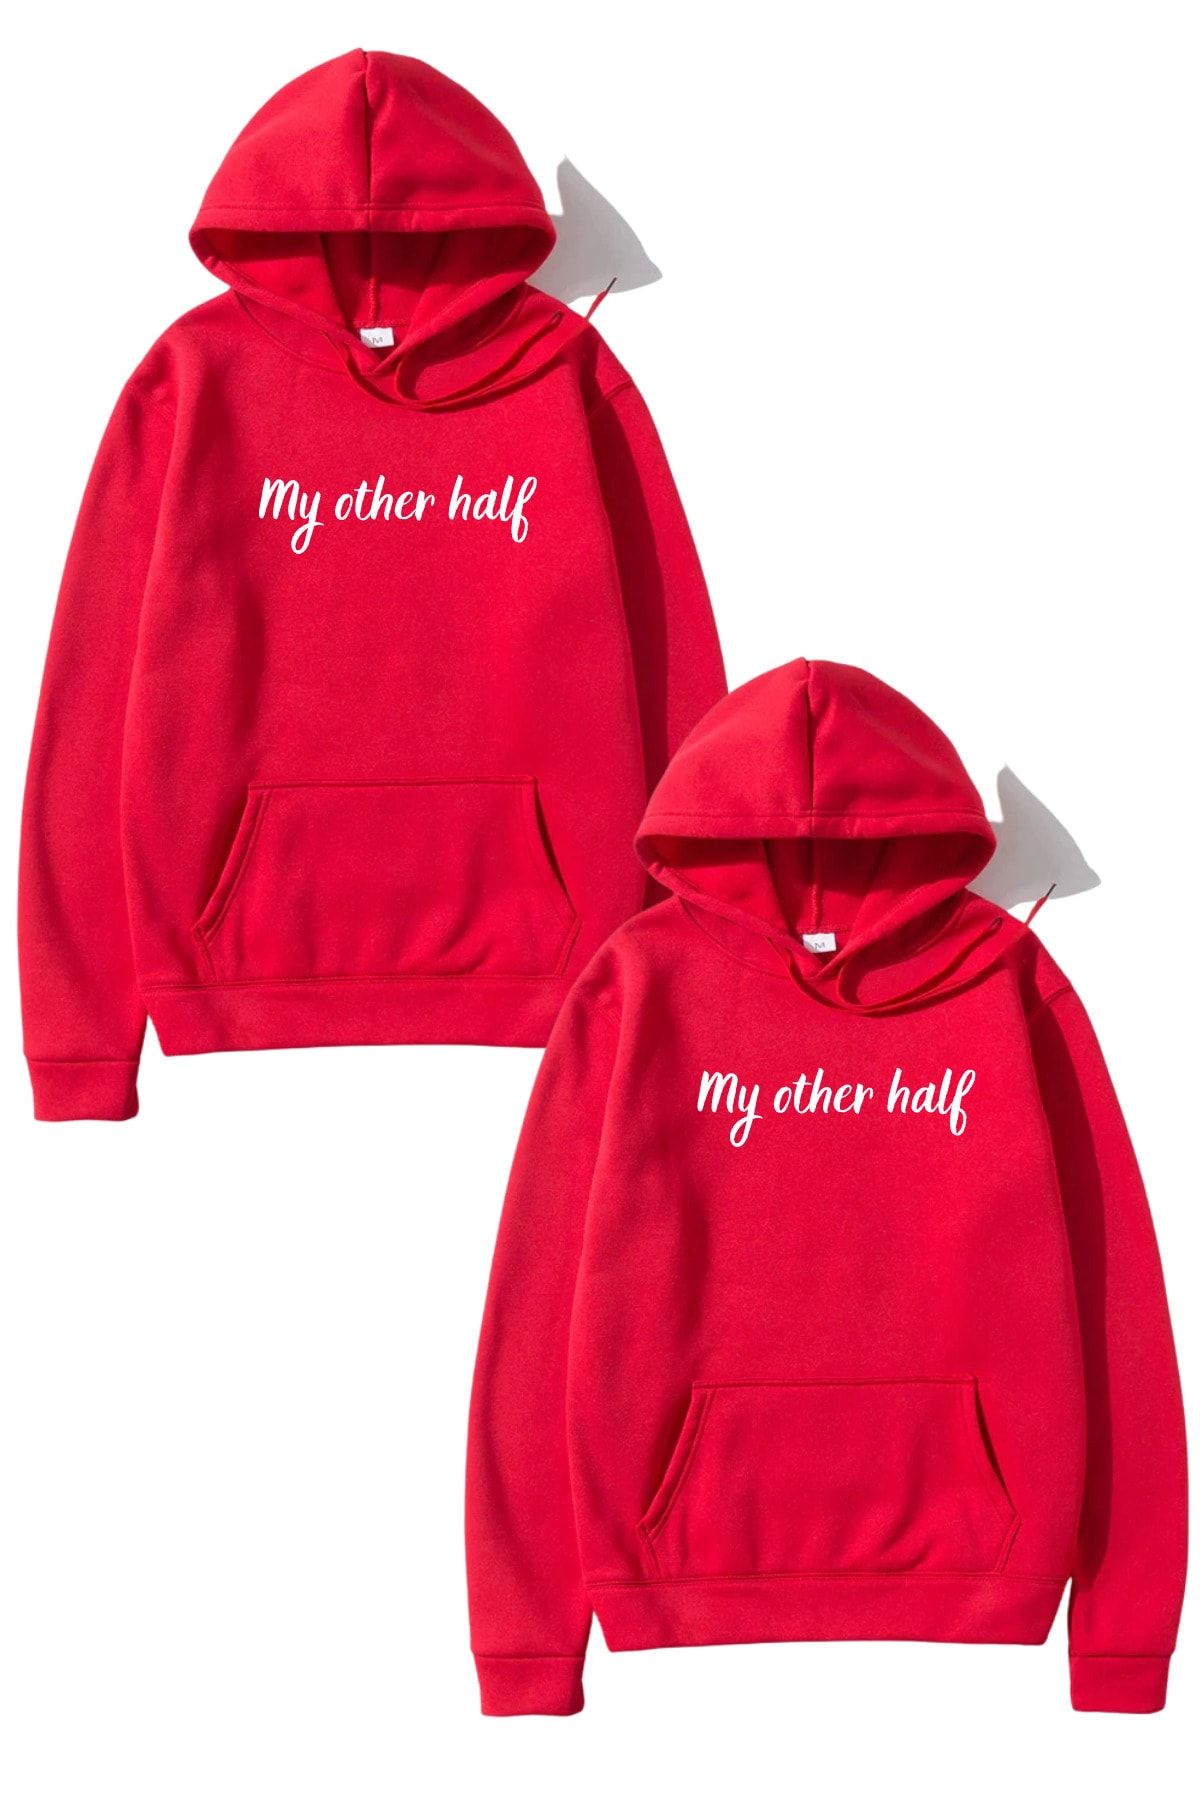 MODAGEN Sevgili Çift Kombini My Other Half Tasarım 2'li Ürün Kırmızı Kapüşonlu Sweatshirt